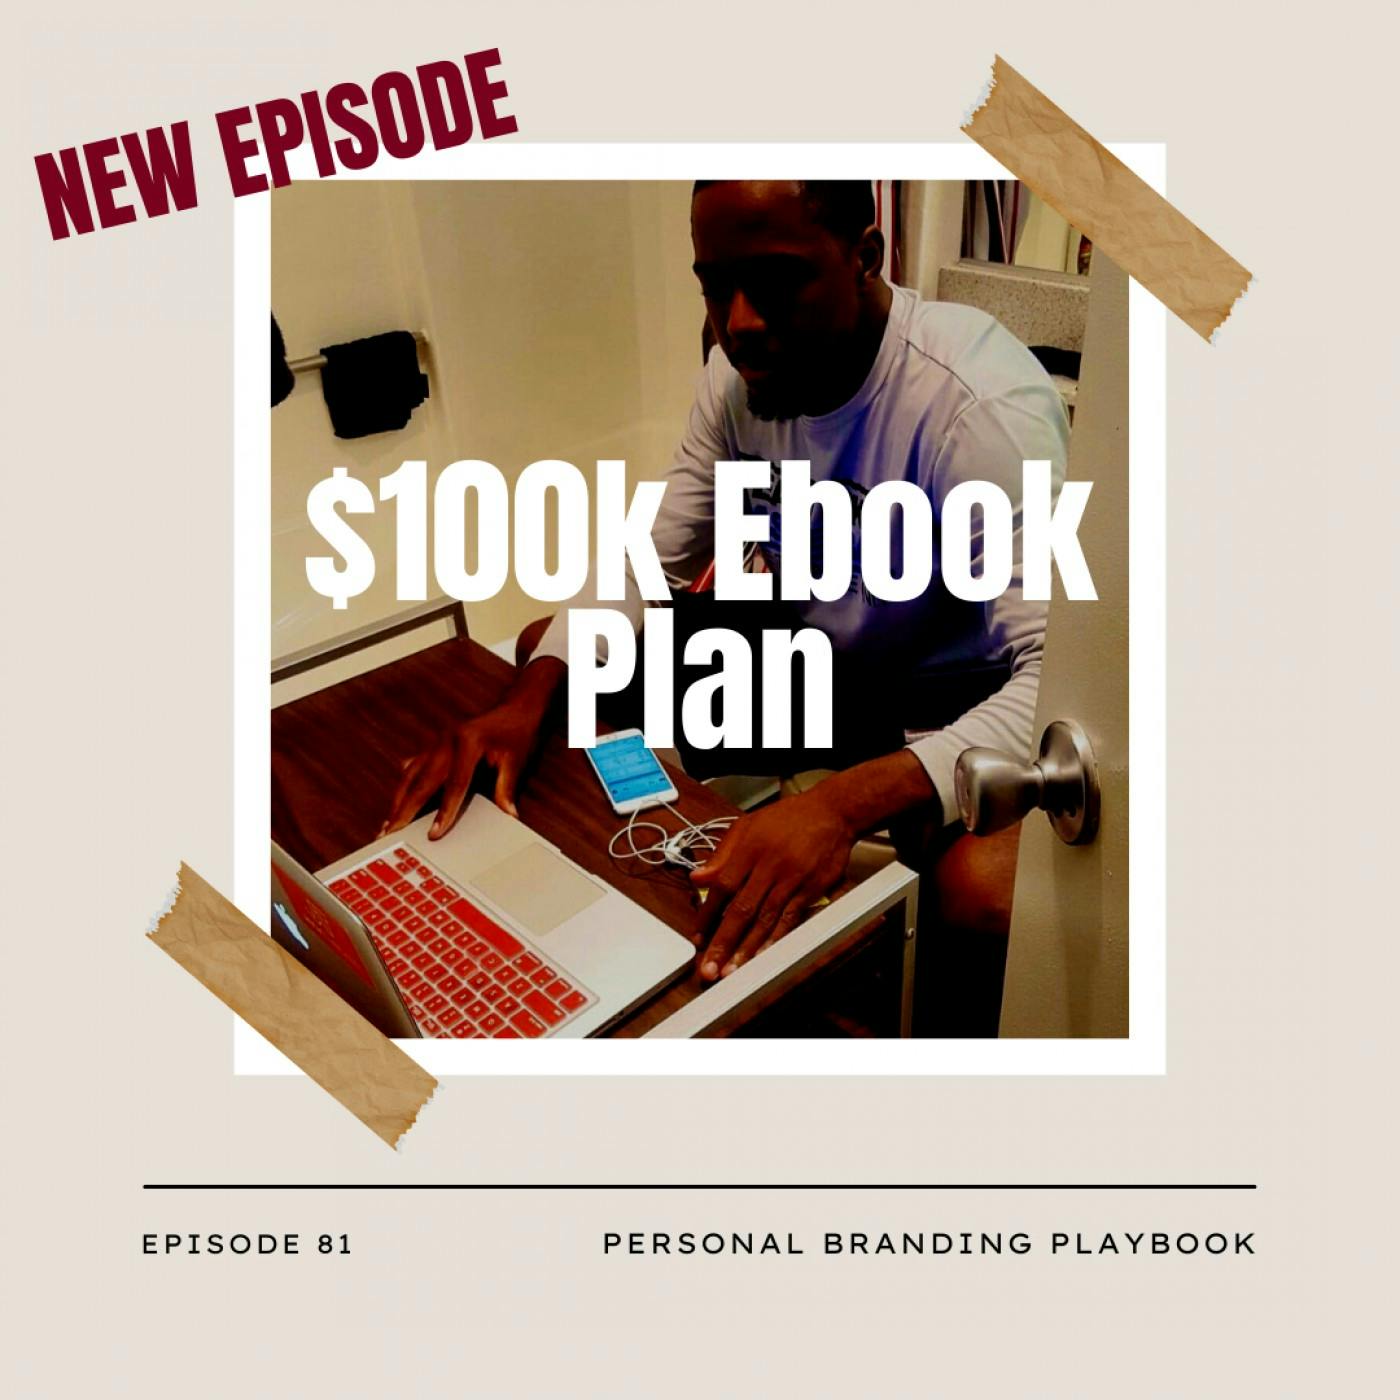 My $100k Ebook Plan